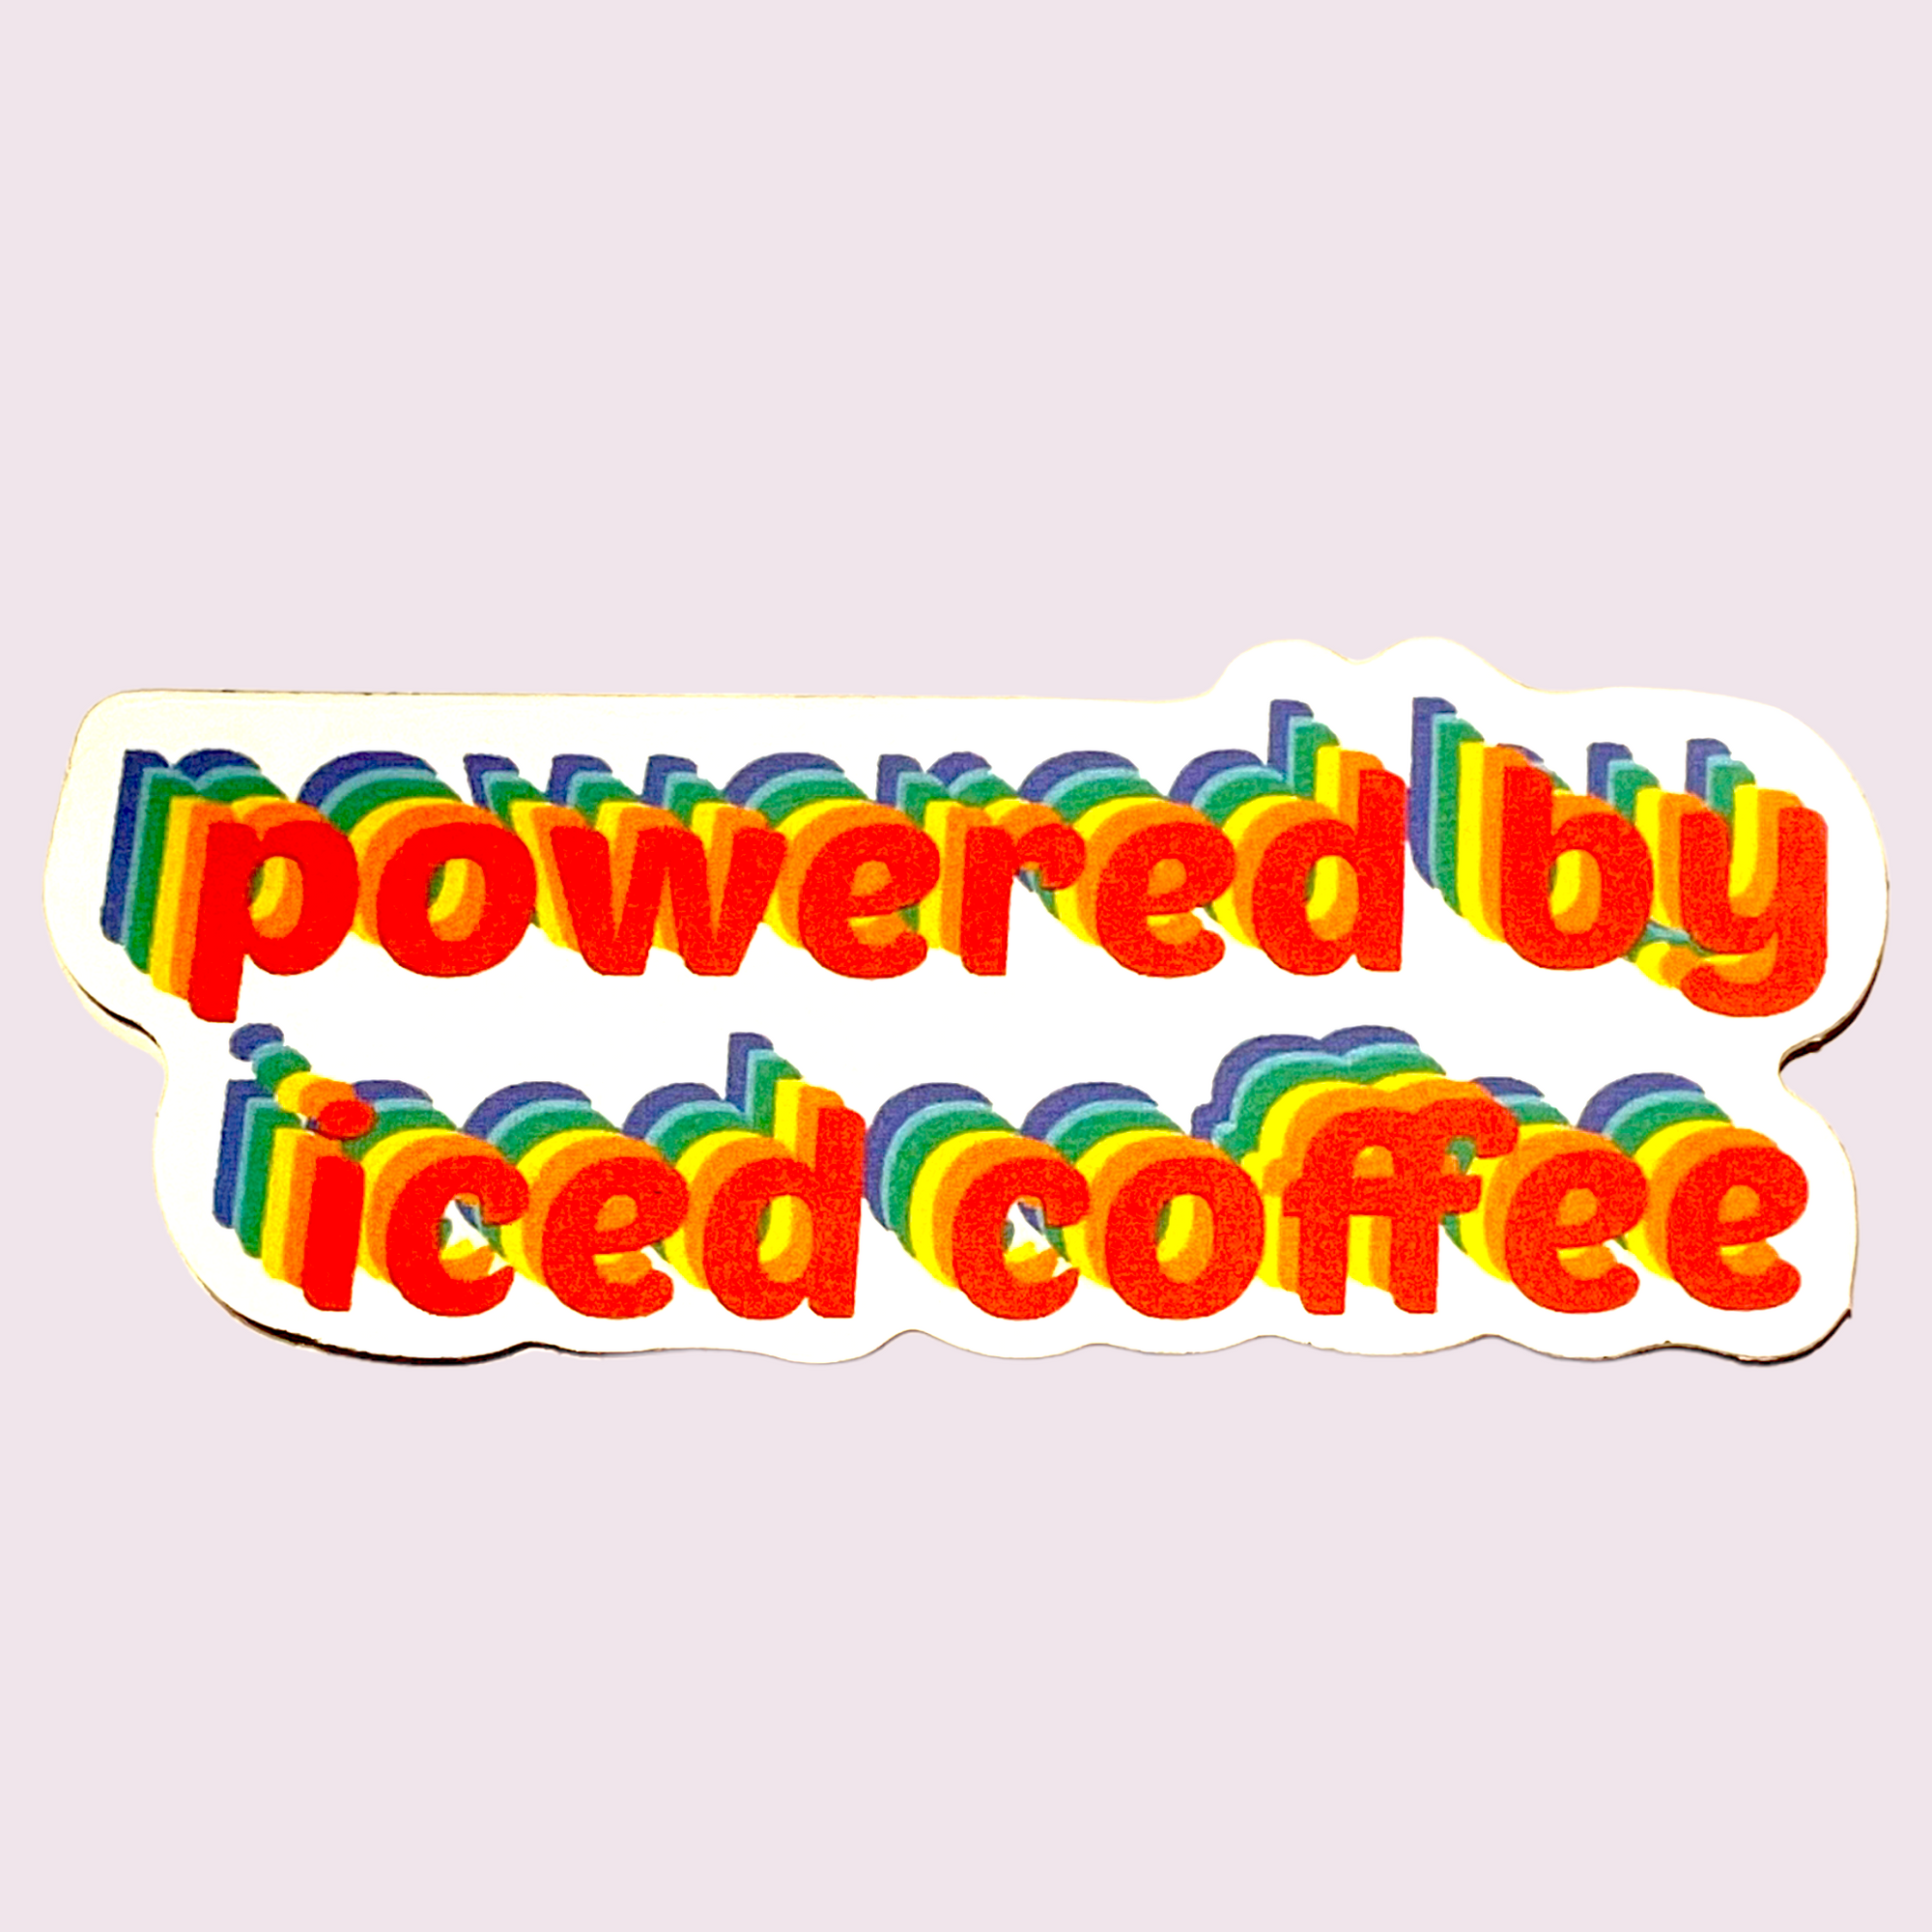 Powered By Ice Coffee Sticker